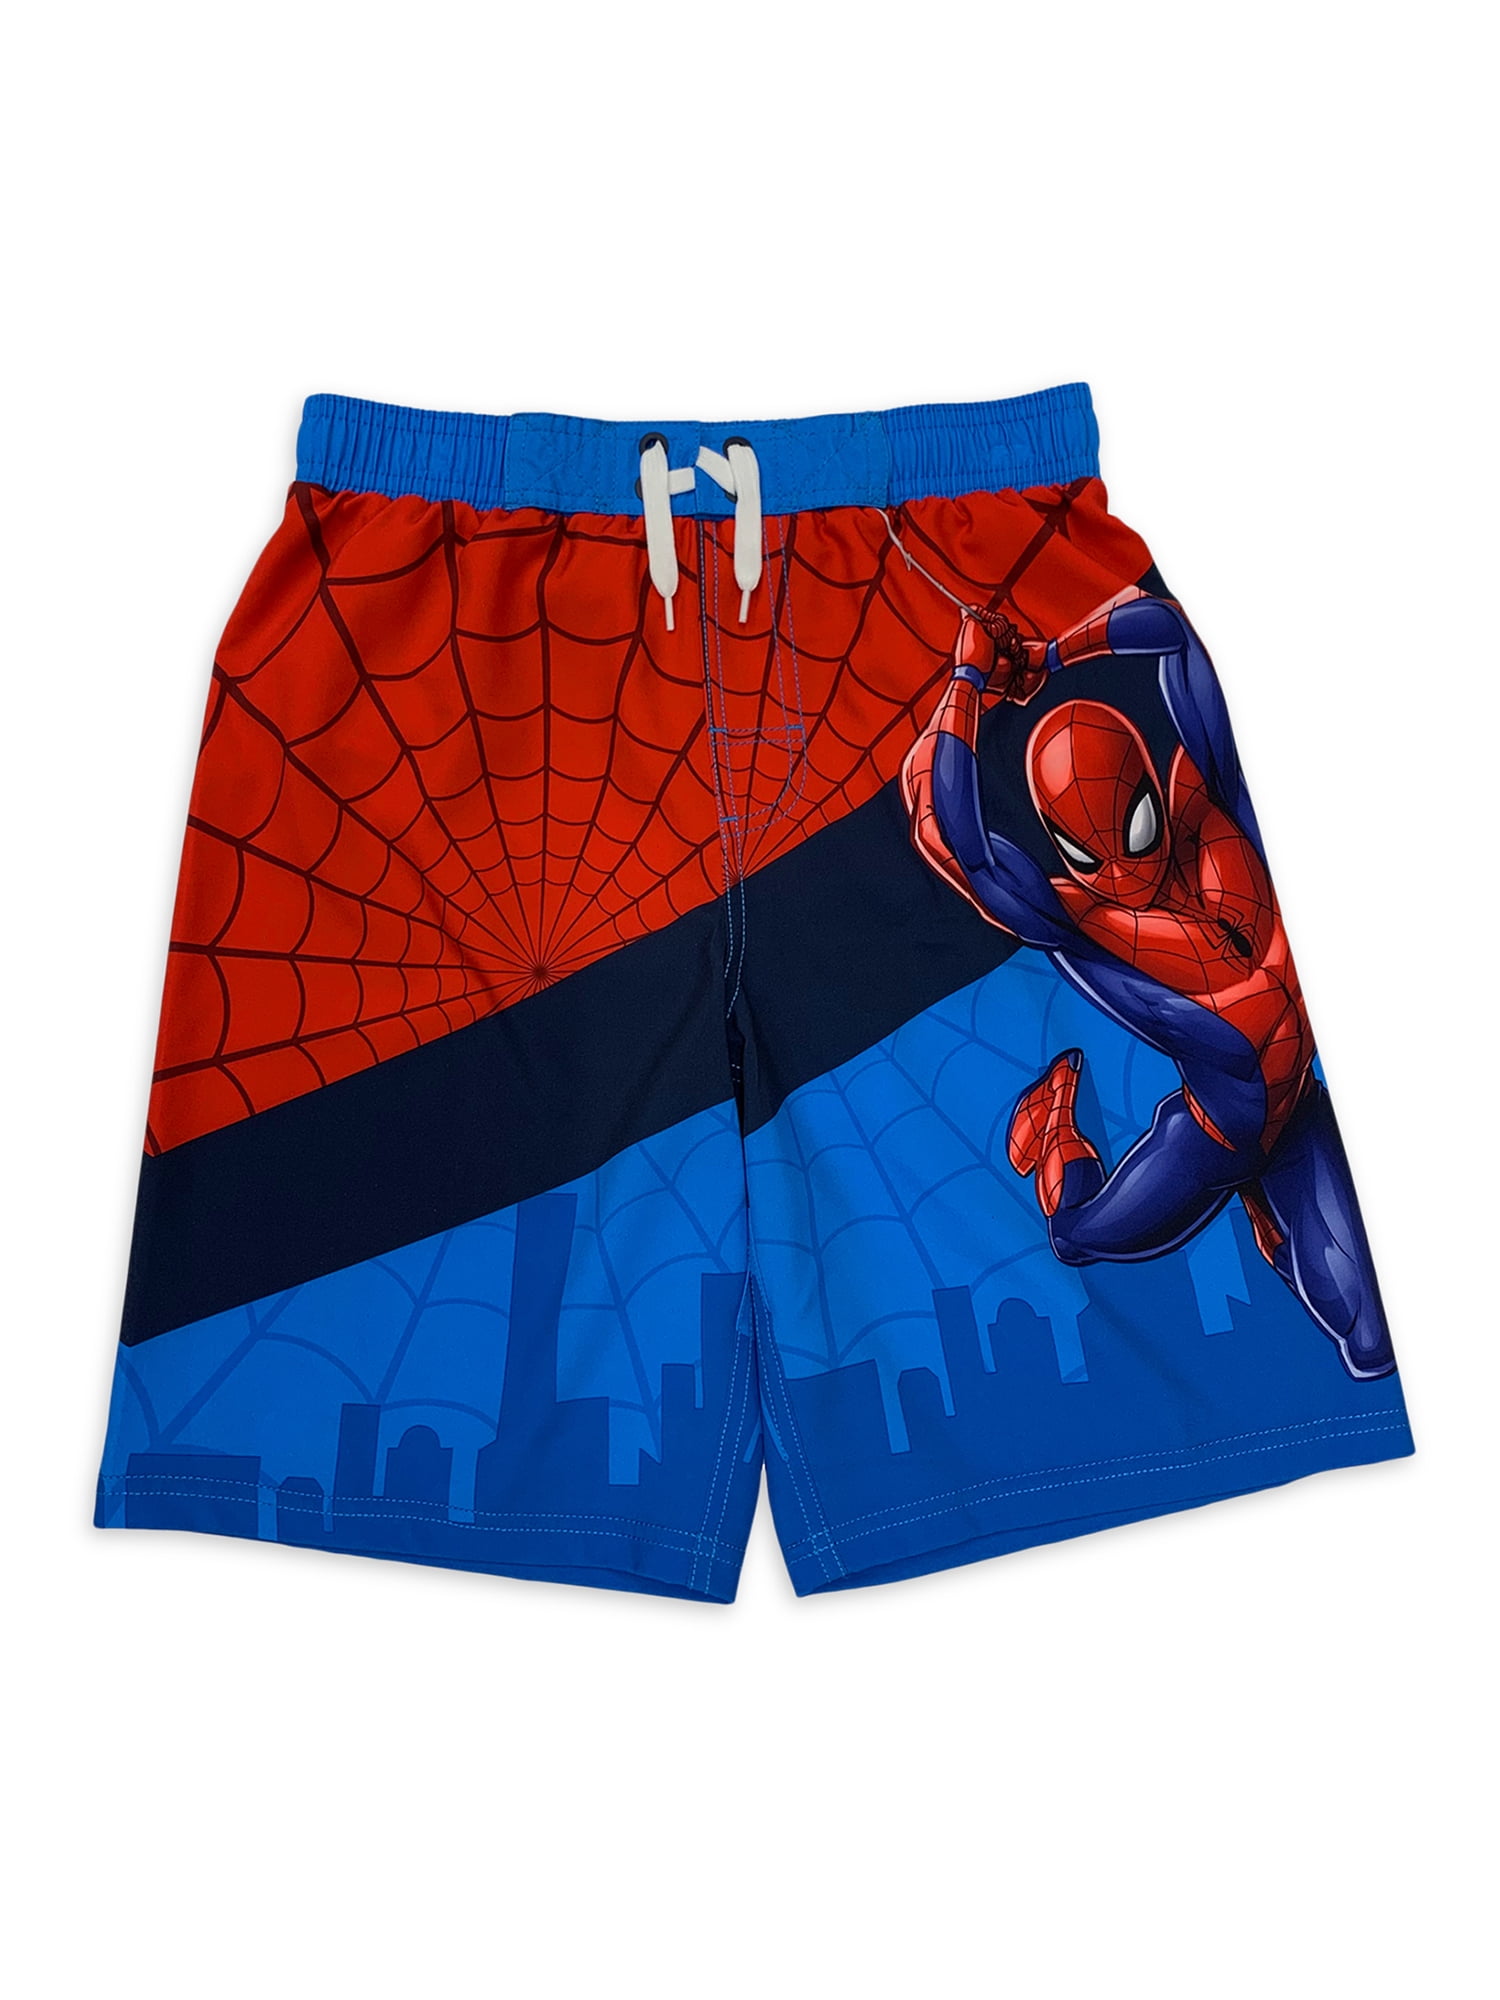 Boys Speedo Spiderman Spider-Man Marvel Disney Swimming Shorts Water All Sizes 